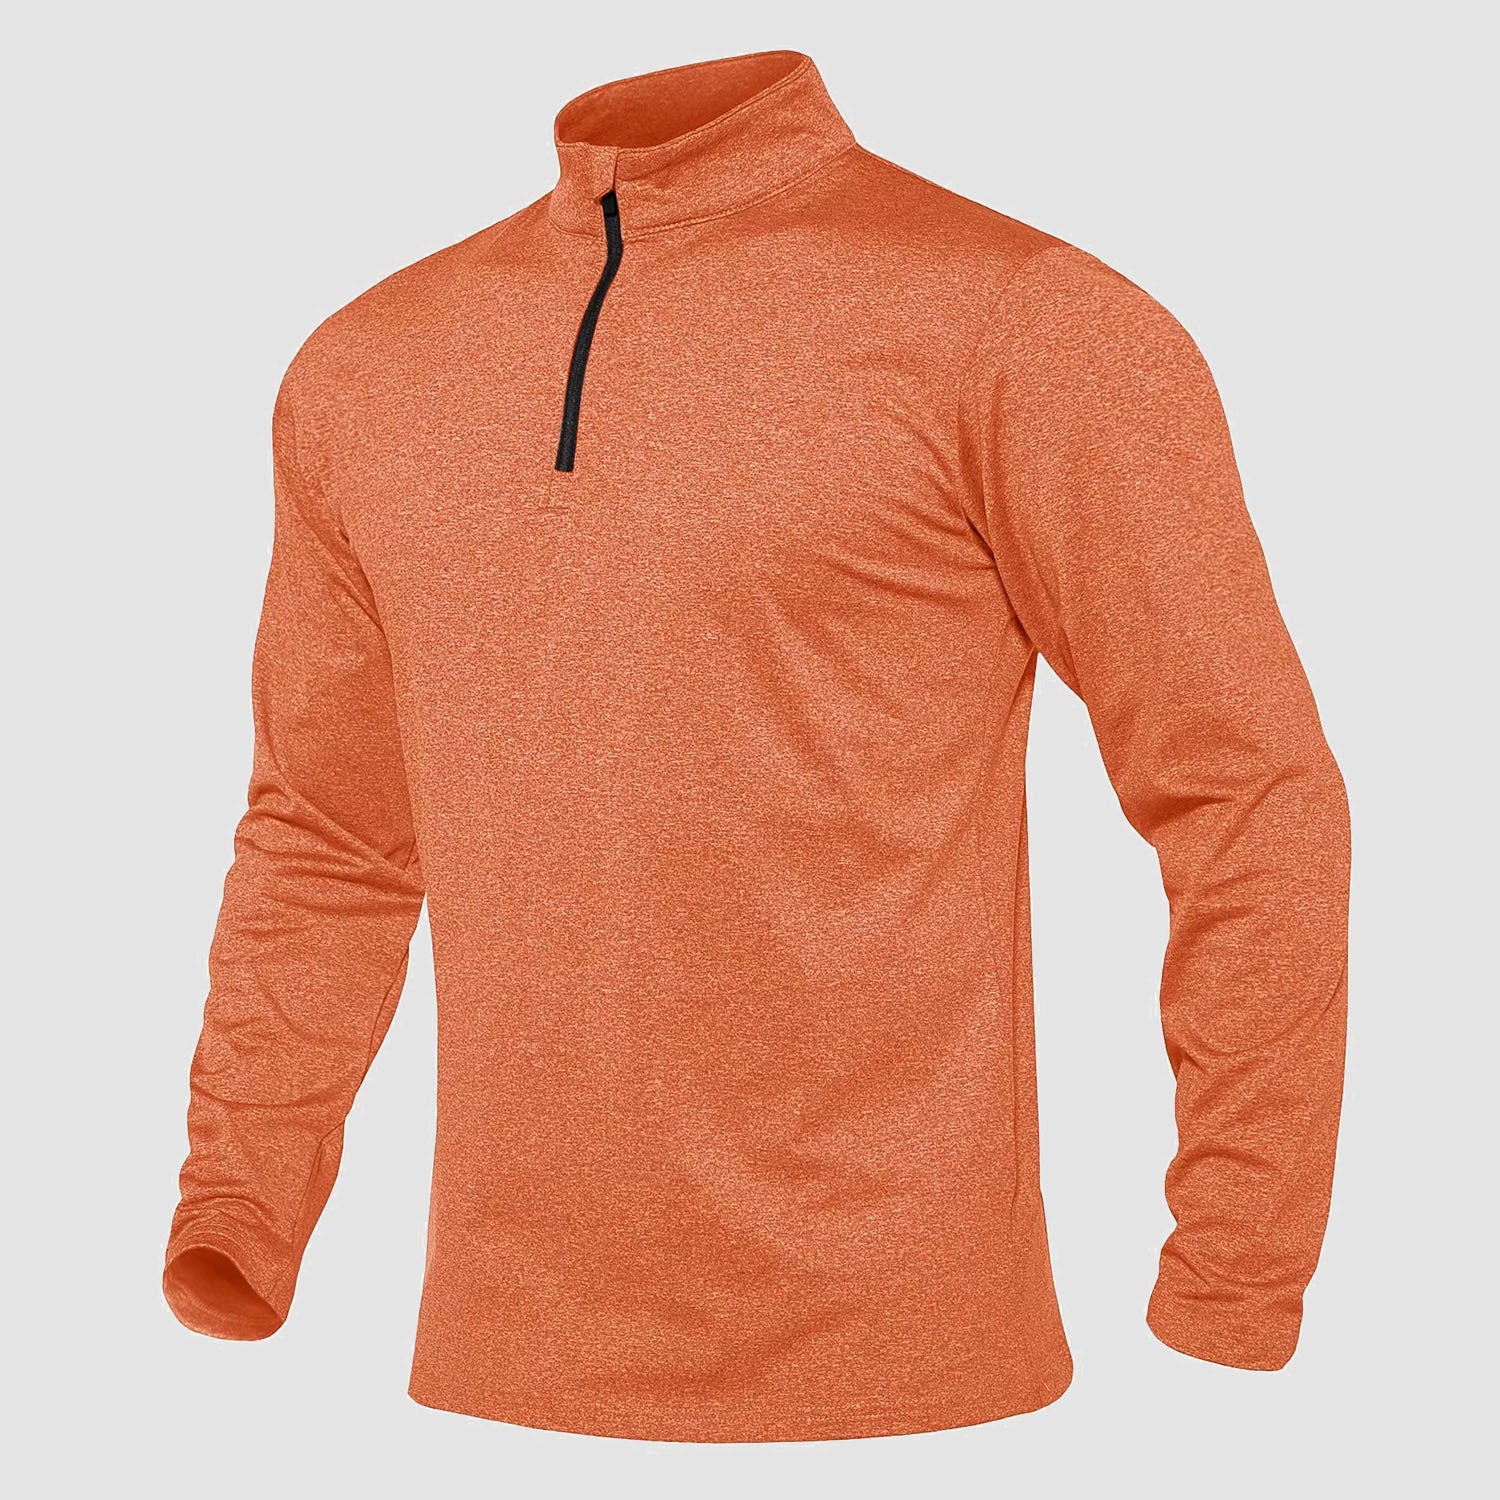 Men's Athletic Shirt 1/4 Zip Fleece Long Sleeve Sweatshirts